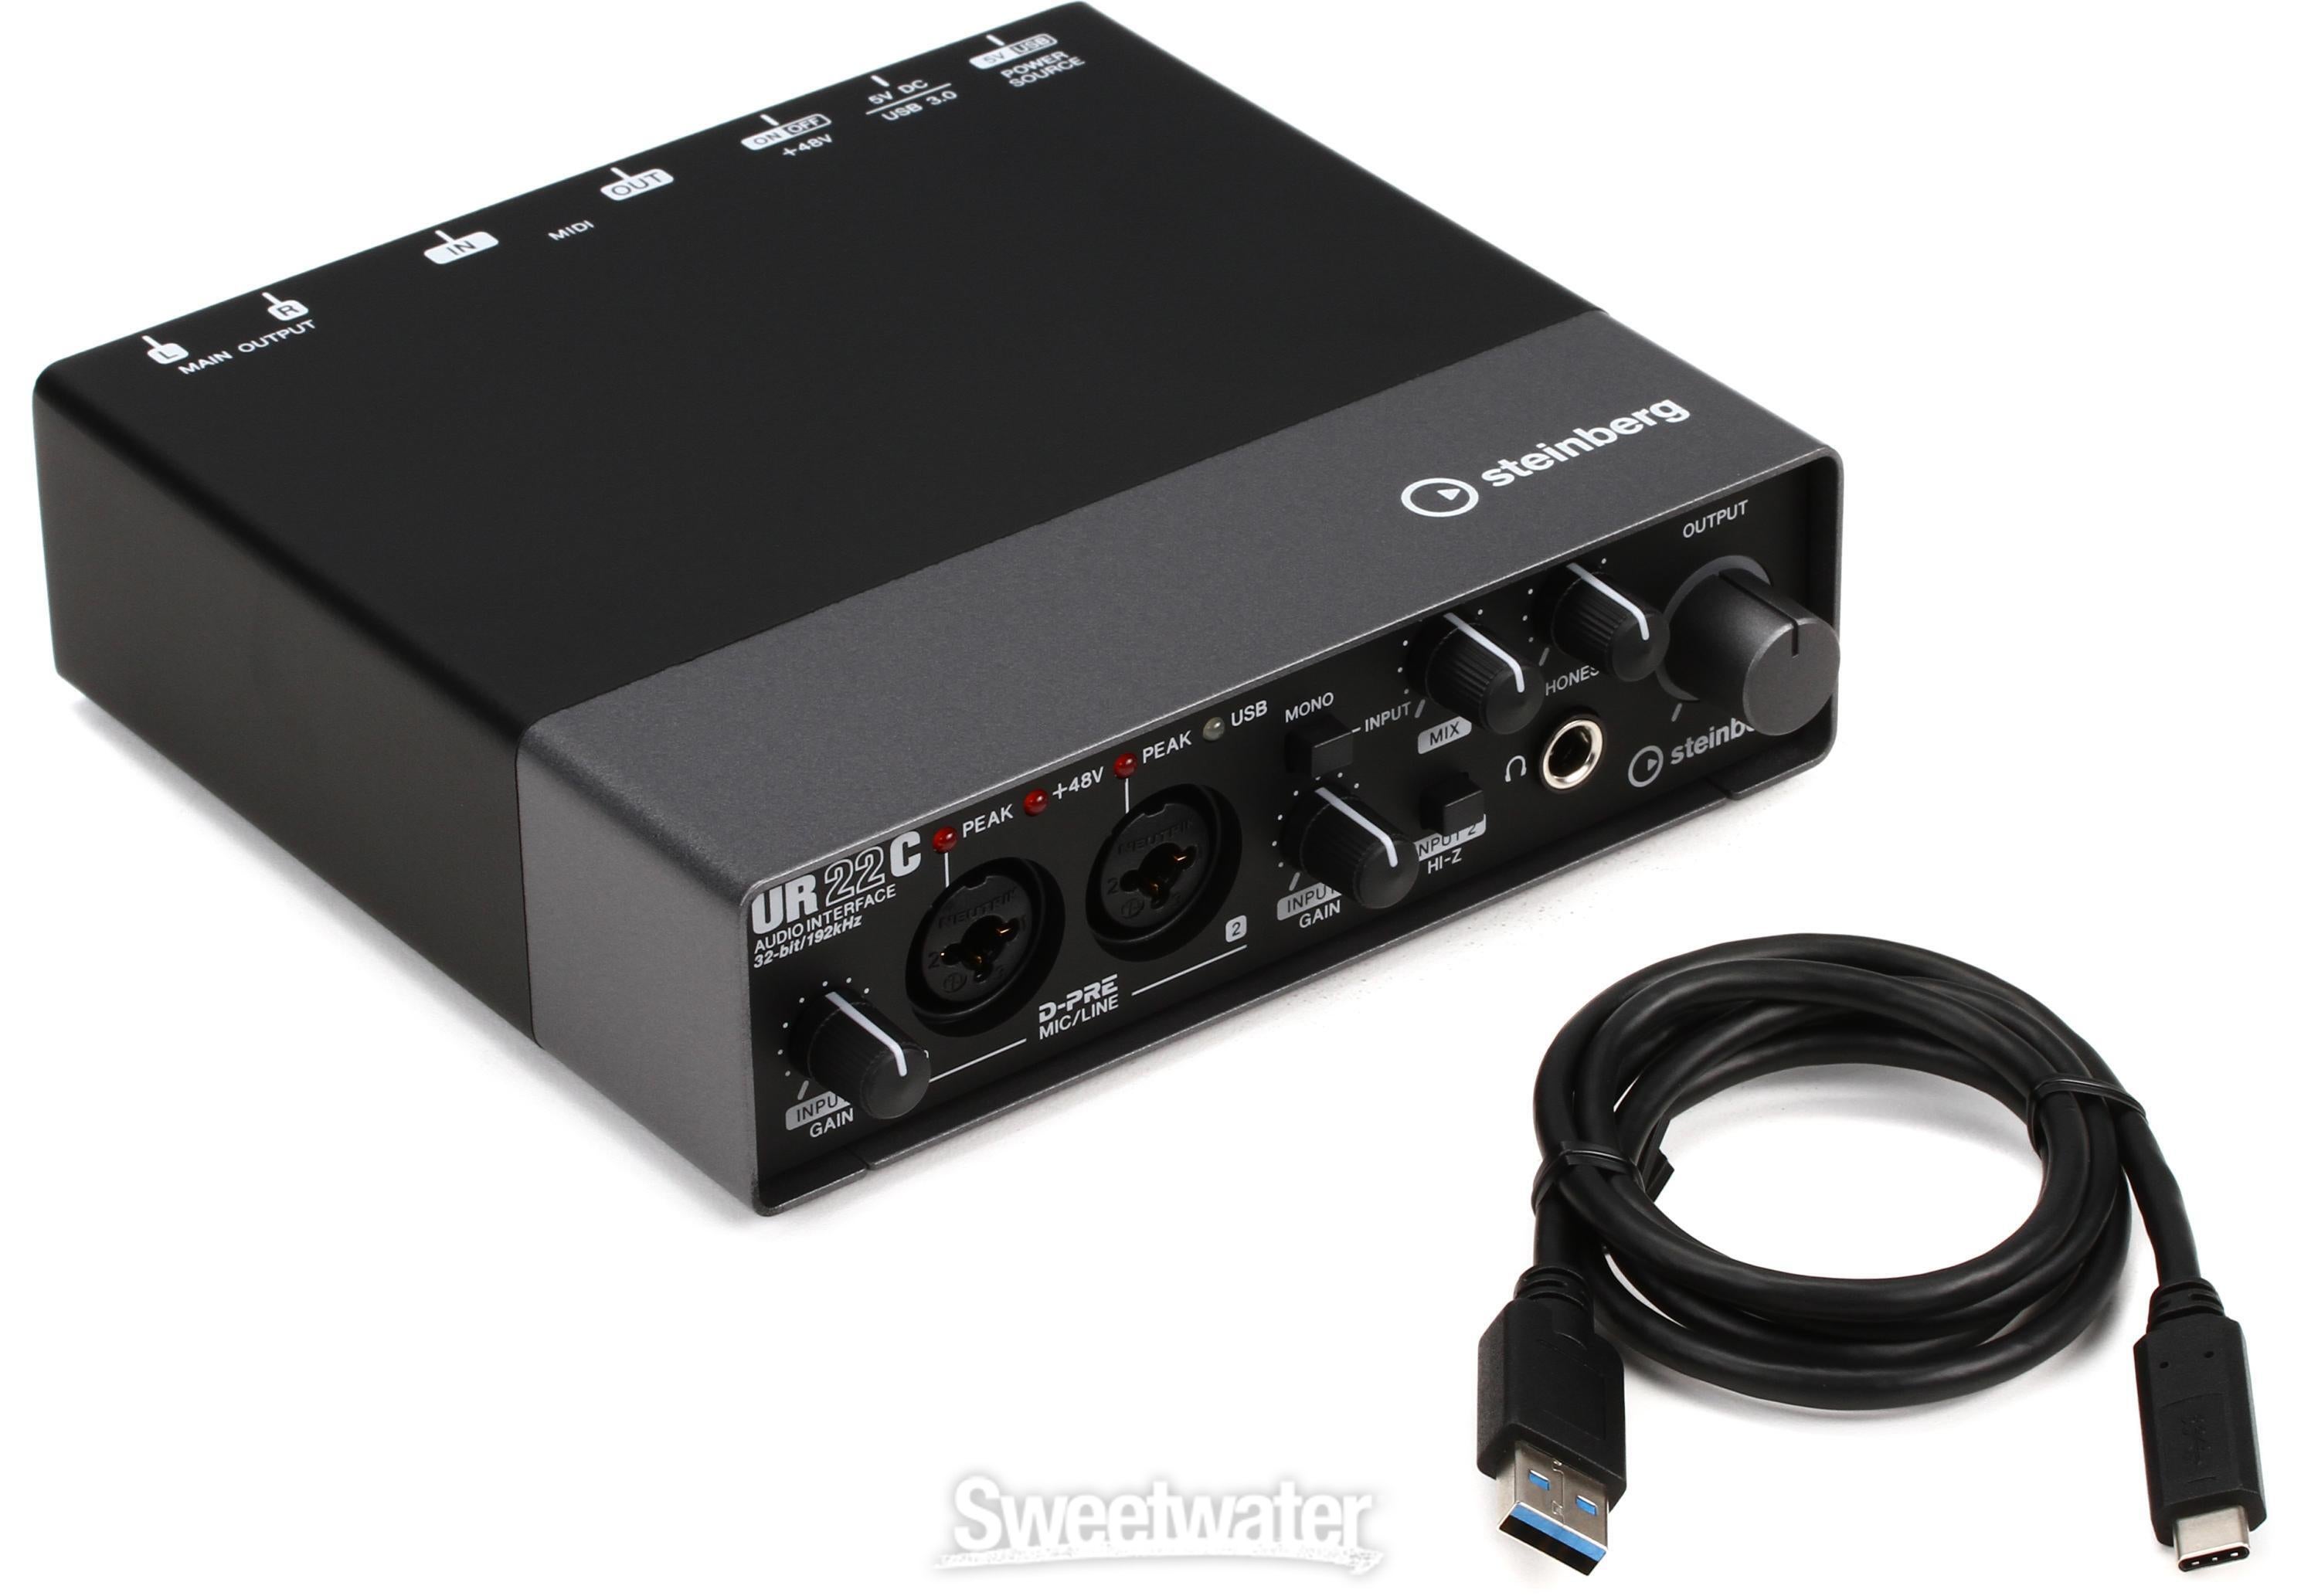 Steinberg UR22C USB Audio Interface Reviews | Sweetwater